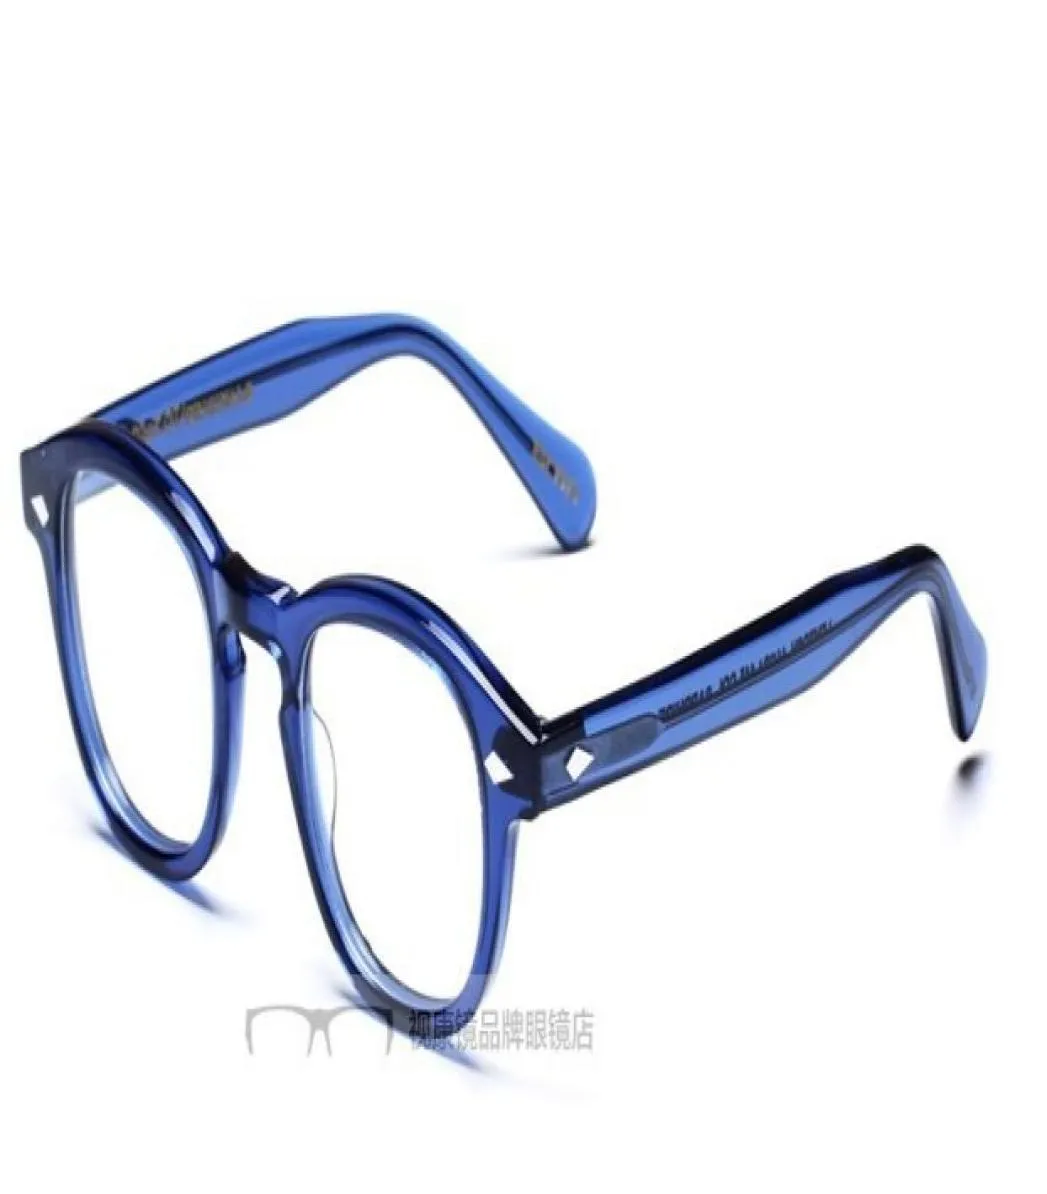 New Arrival High Quality brand Johnny Depp Unisex Optical Frame Eyeglasses Spectacles Frames Prescription Glasses7573115